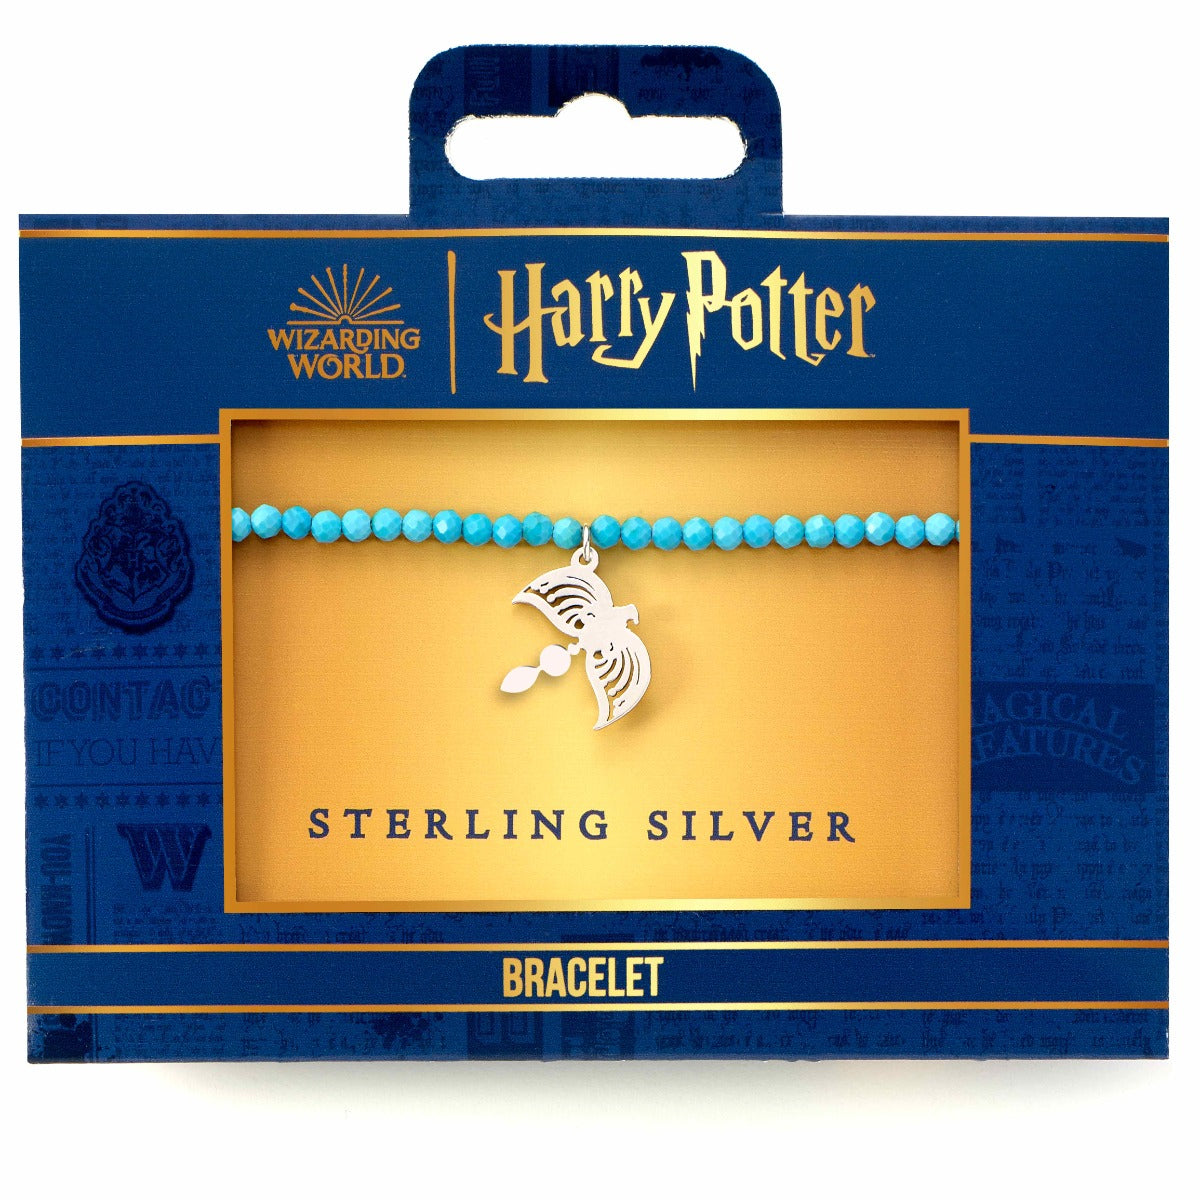 Harry Potter Crystal Bracelet & Sterling Silver Diadem Charm